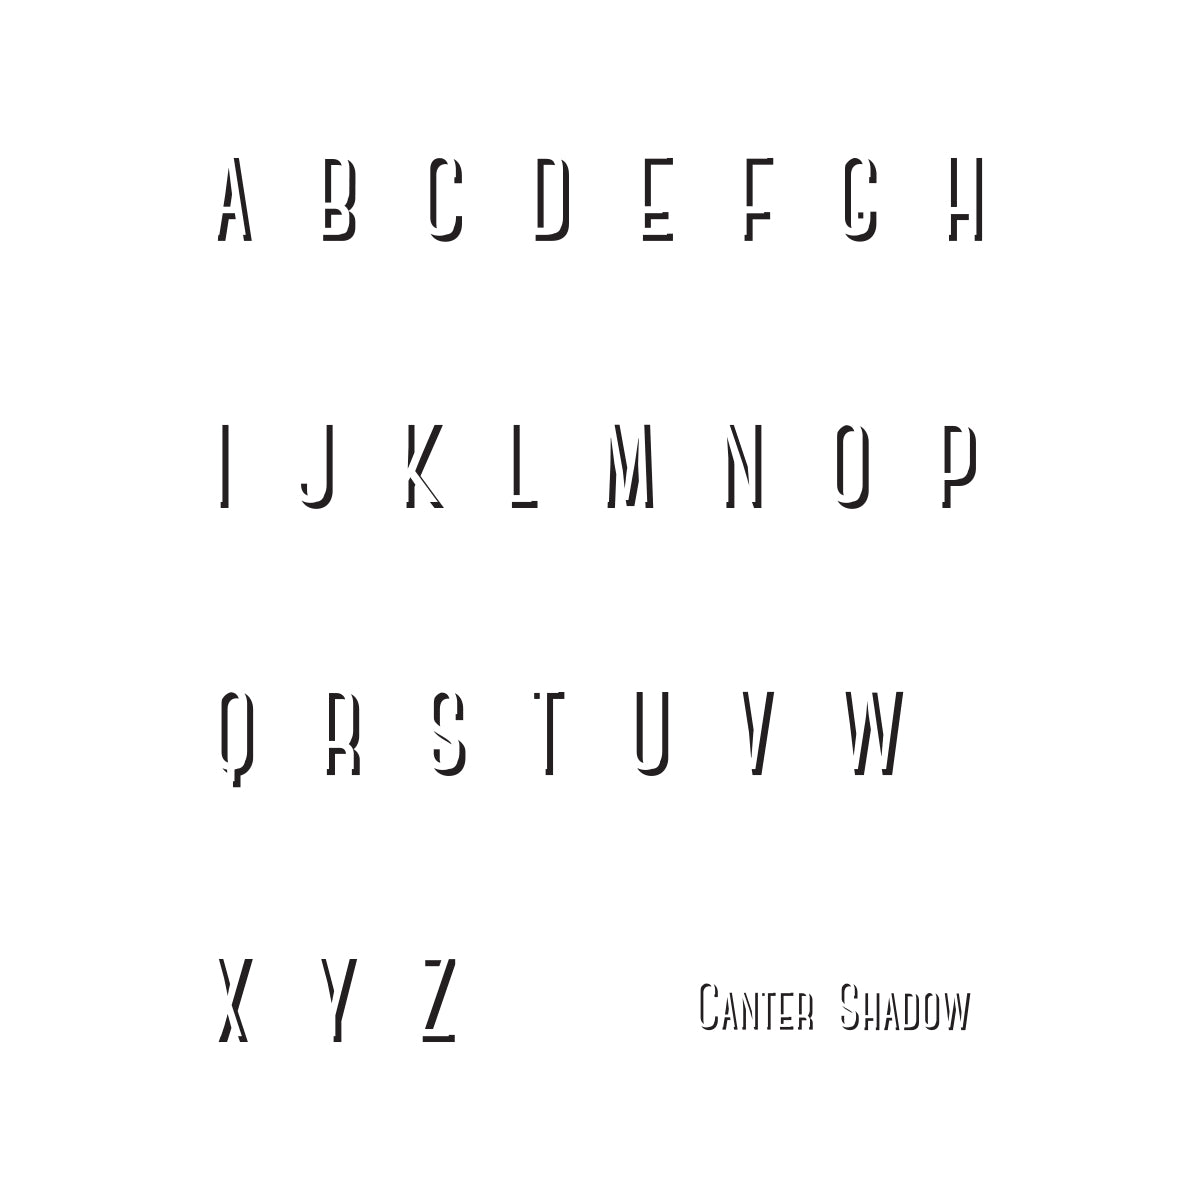 Canter Shadow Written Number Block.